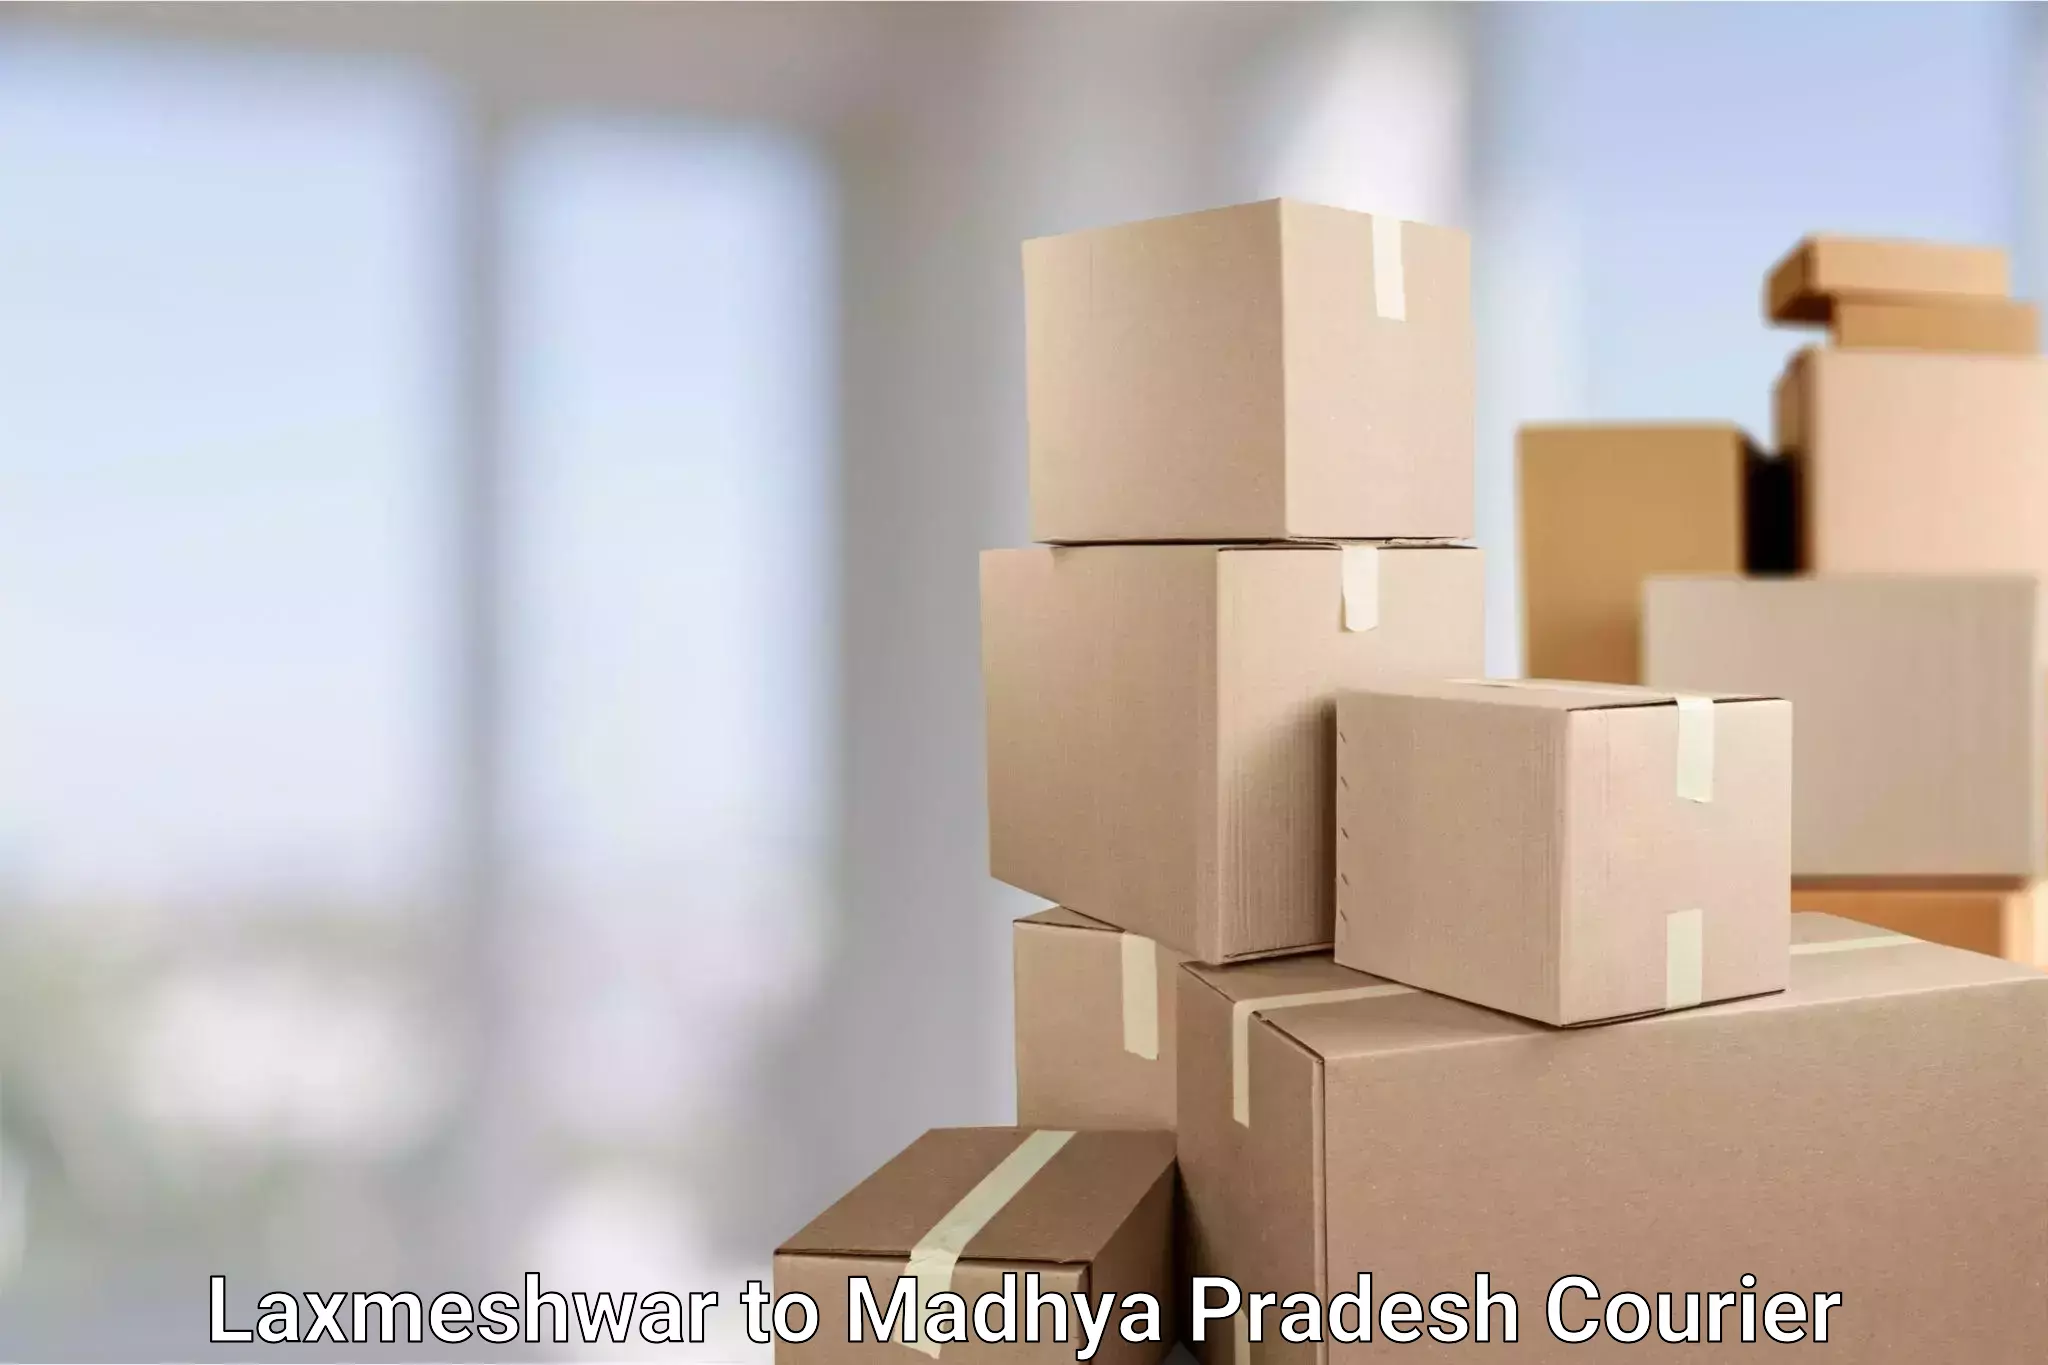 On-call courier service Laxmeshwar to Madhya Pradesh